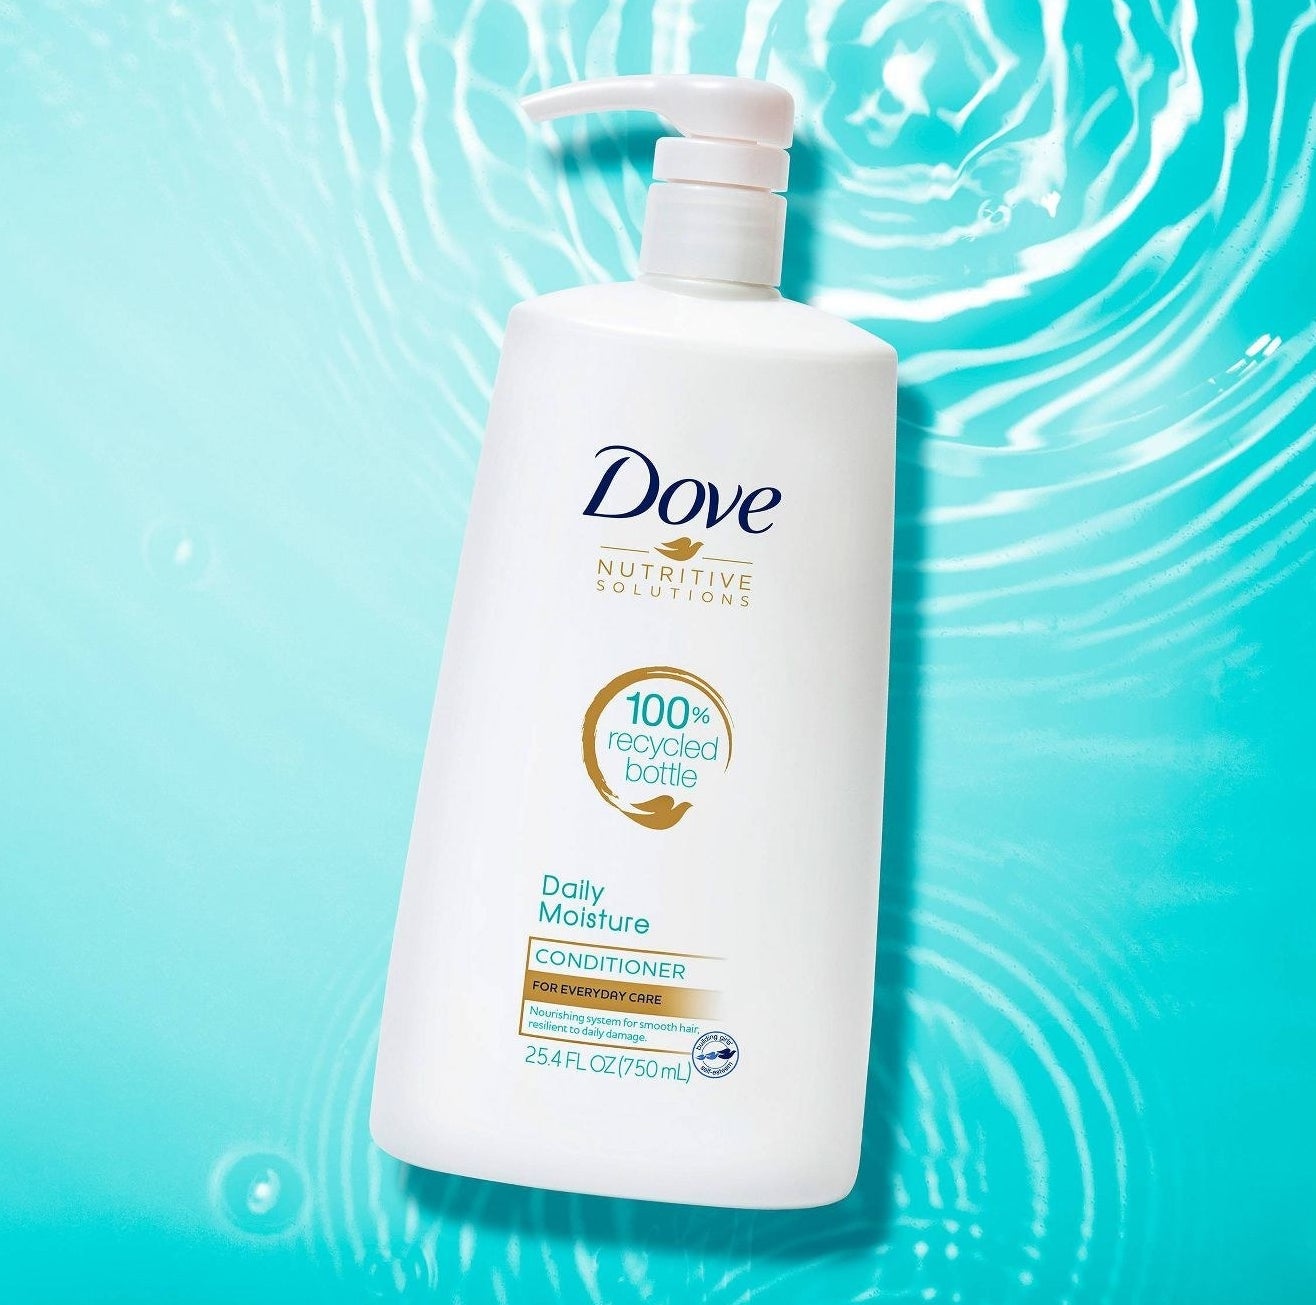 The Dove moisturizing conditioner